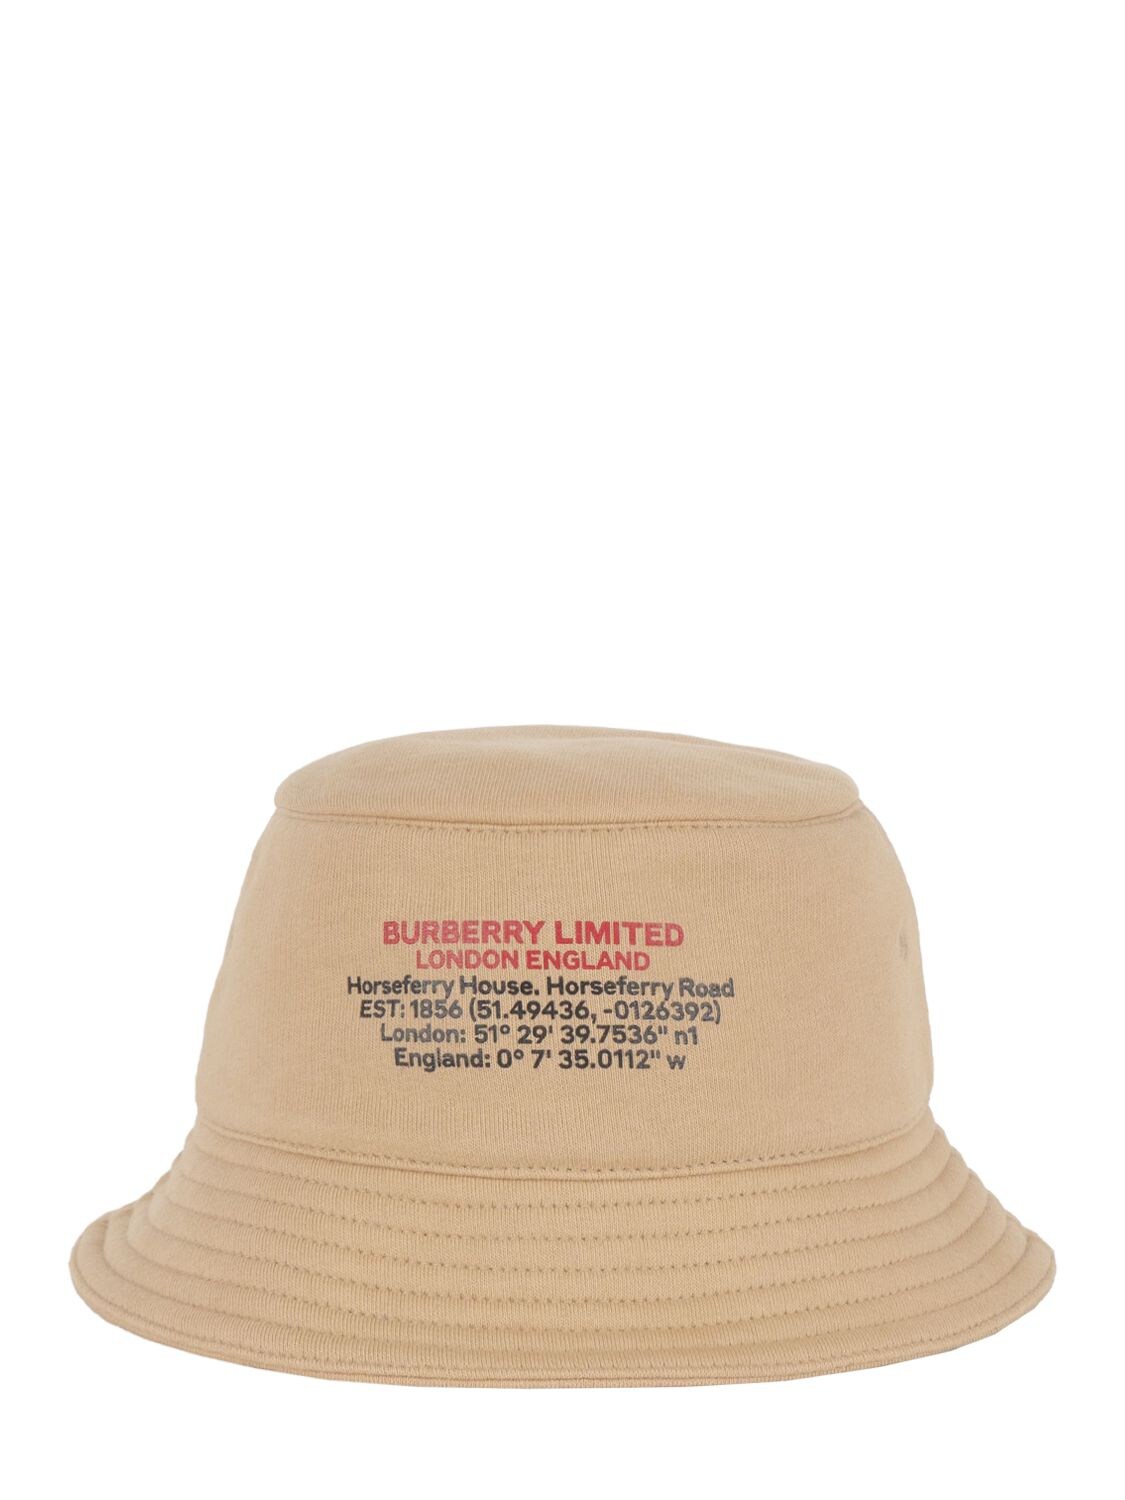 BURBERRY LOGO PRINT COTTON BUCKET HAT